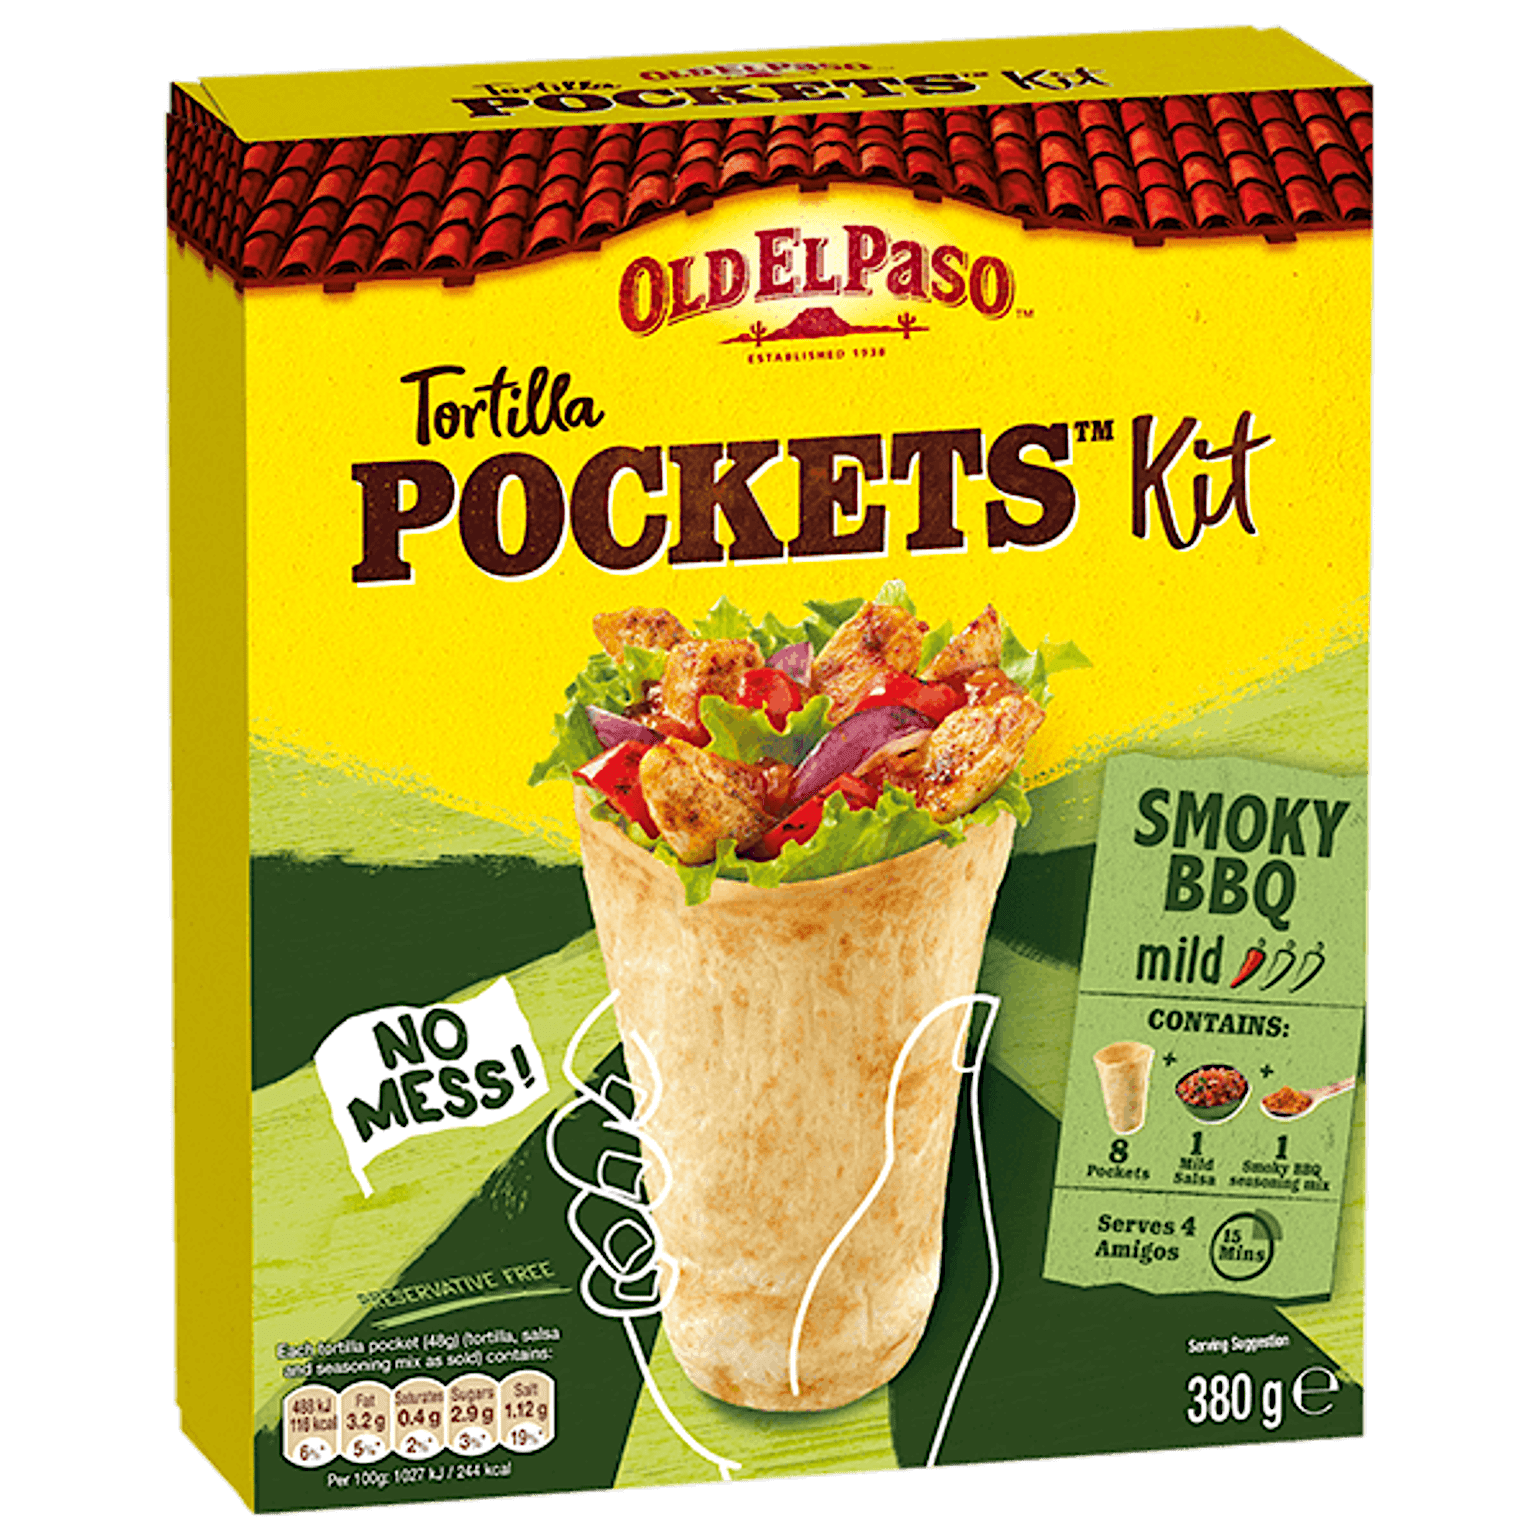 pack of Old El Paso's smoky BBQ tortilla pockets kit containing pockets salsa & seasoning mix (380g)